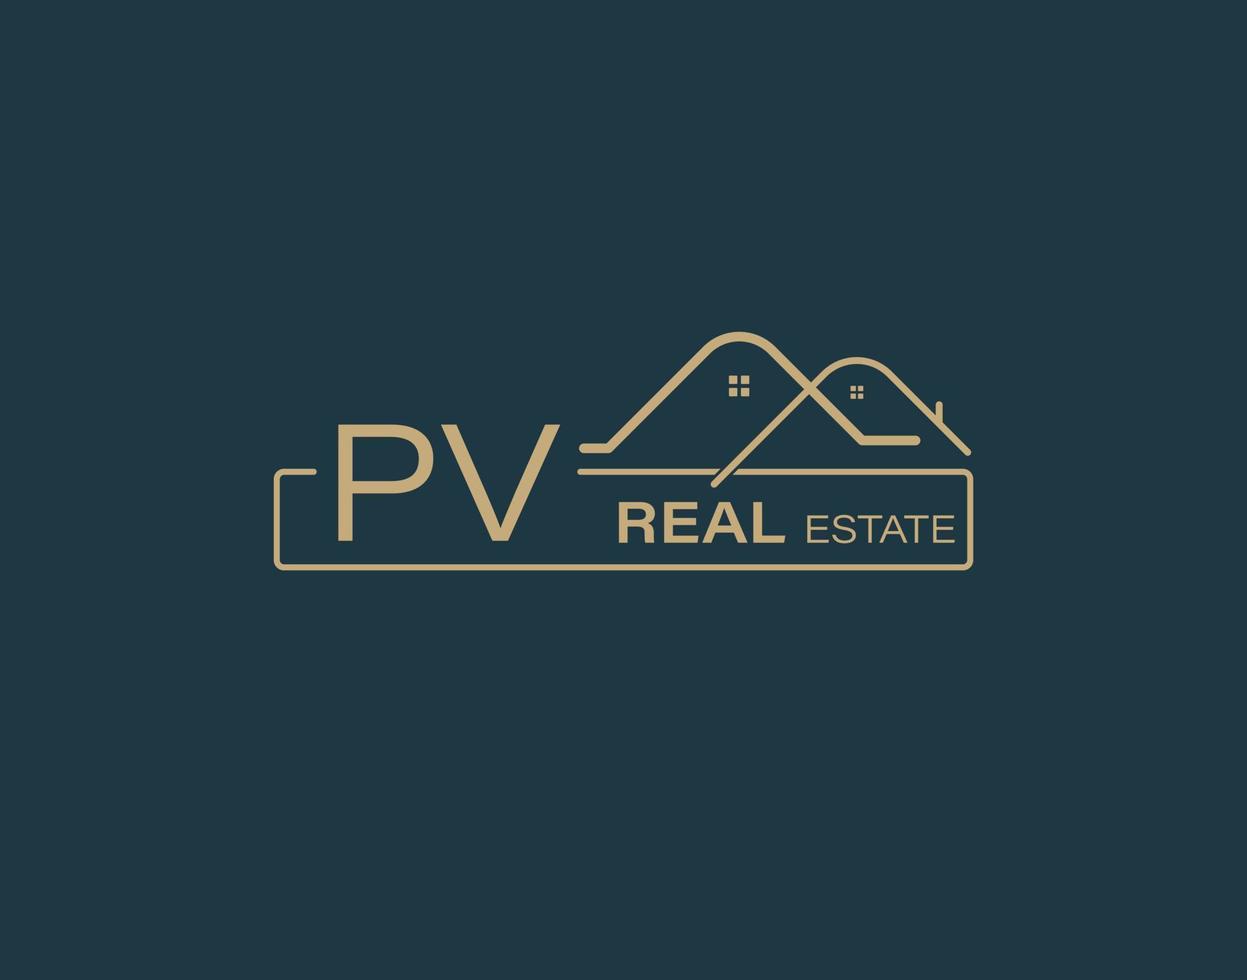 pv real Estado consultores logotipo Projeto vetores imagens. luxo real Estado logotipo Projeto